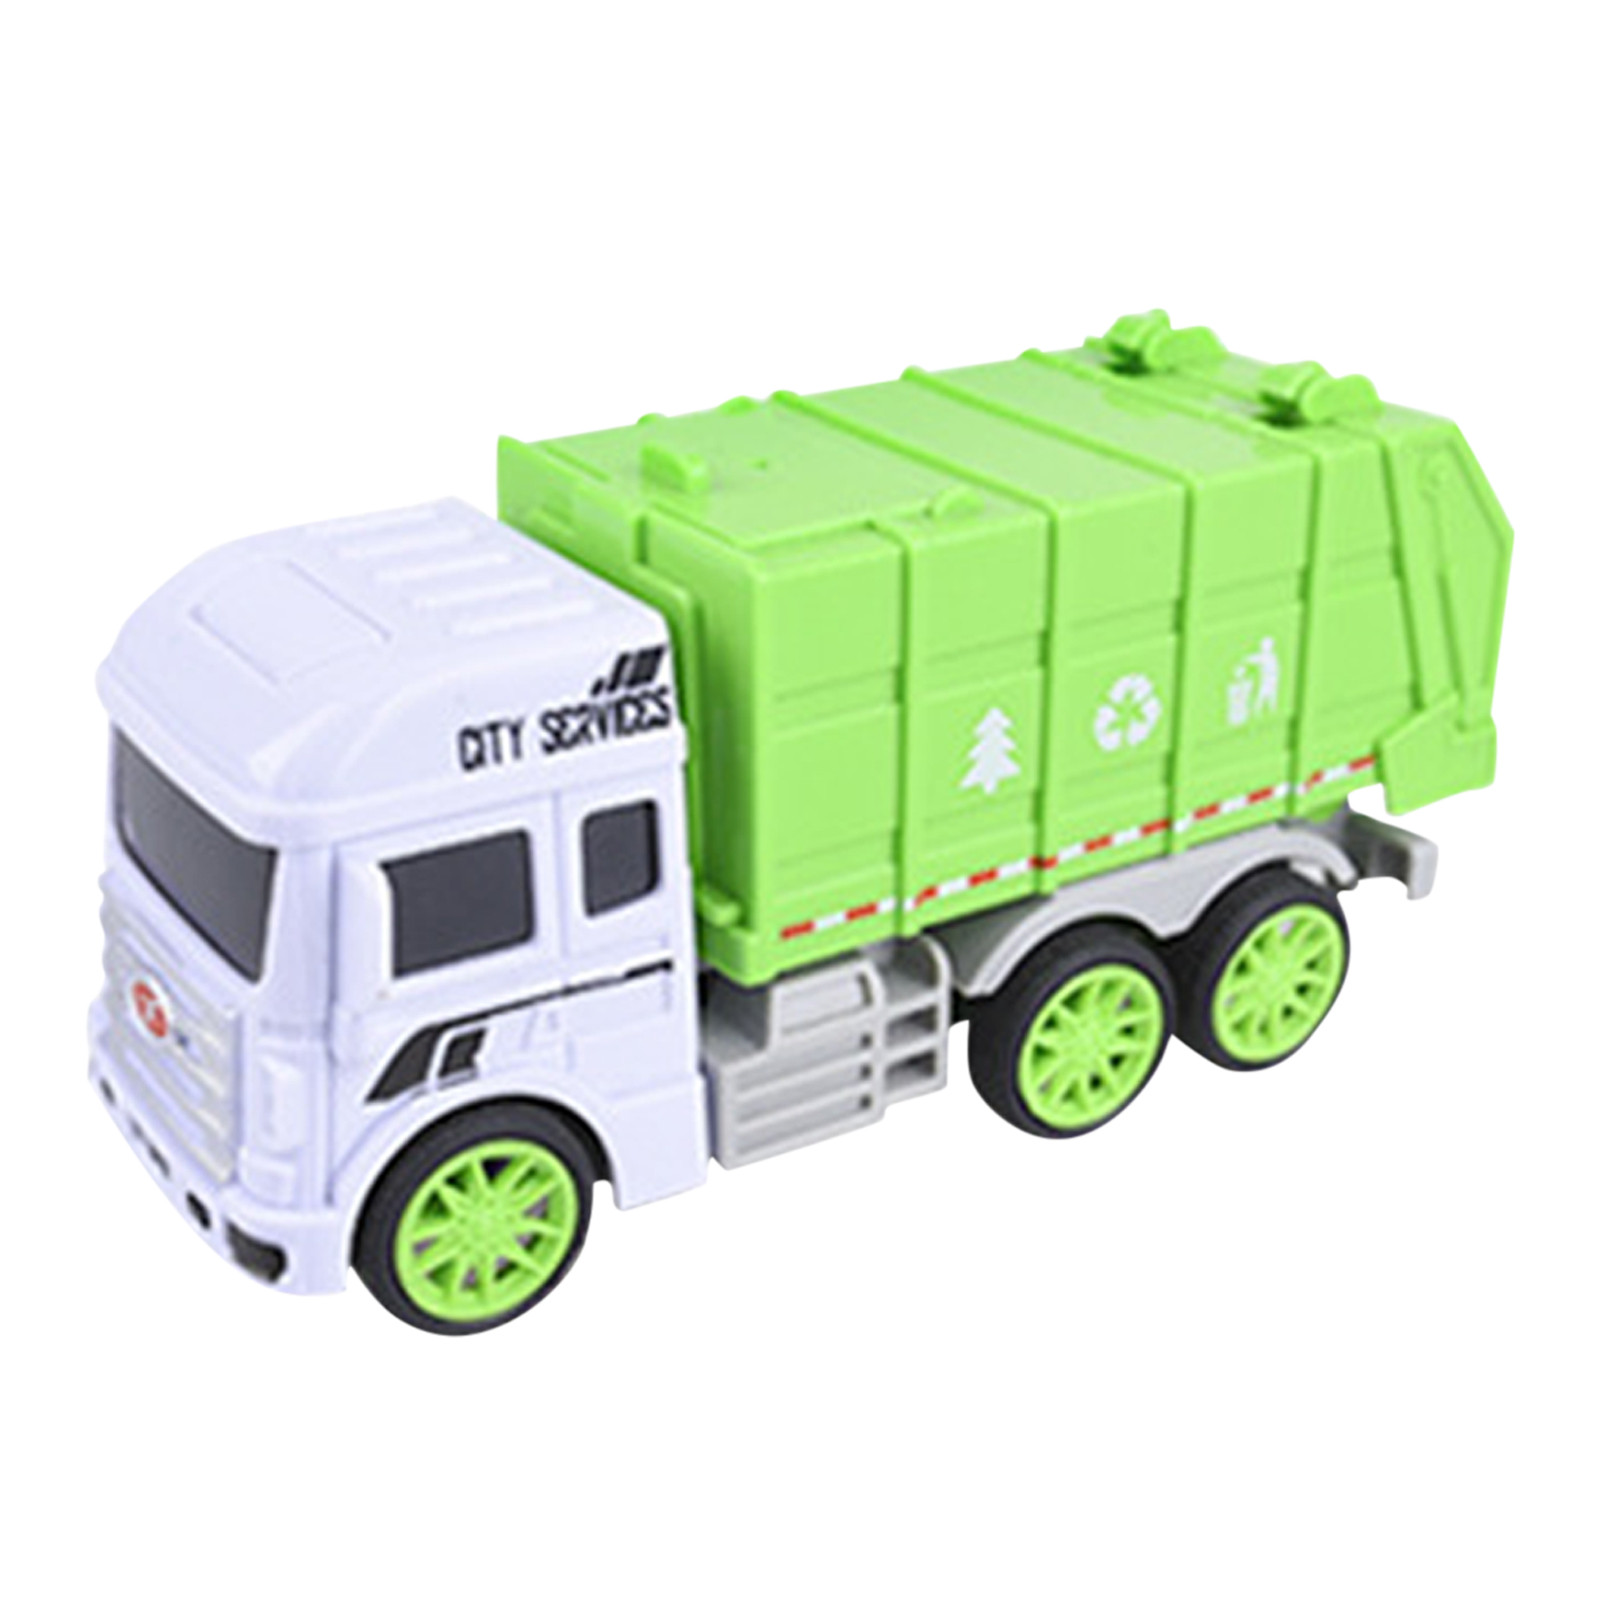 Garbage Truck Toys For Boys Gift Sanitation Car Boys Toys Boys Girls Kids Toddler Car Toys Car Model Children Toys juguetes New alx